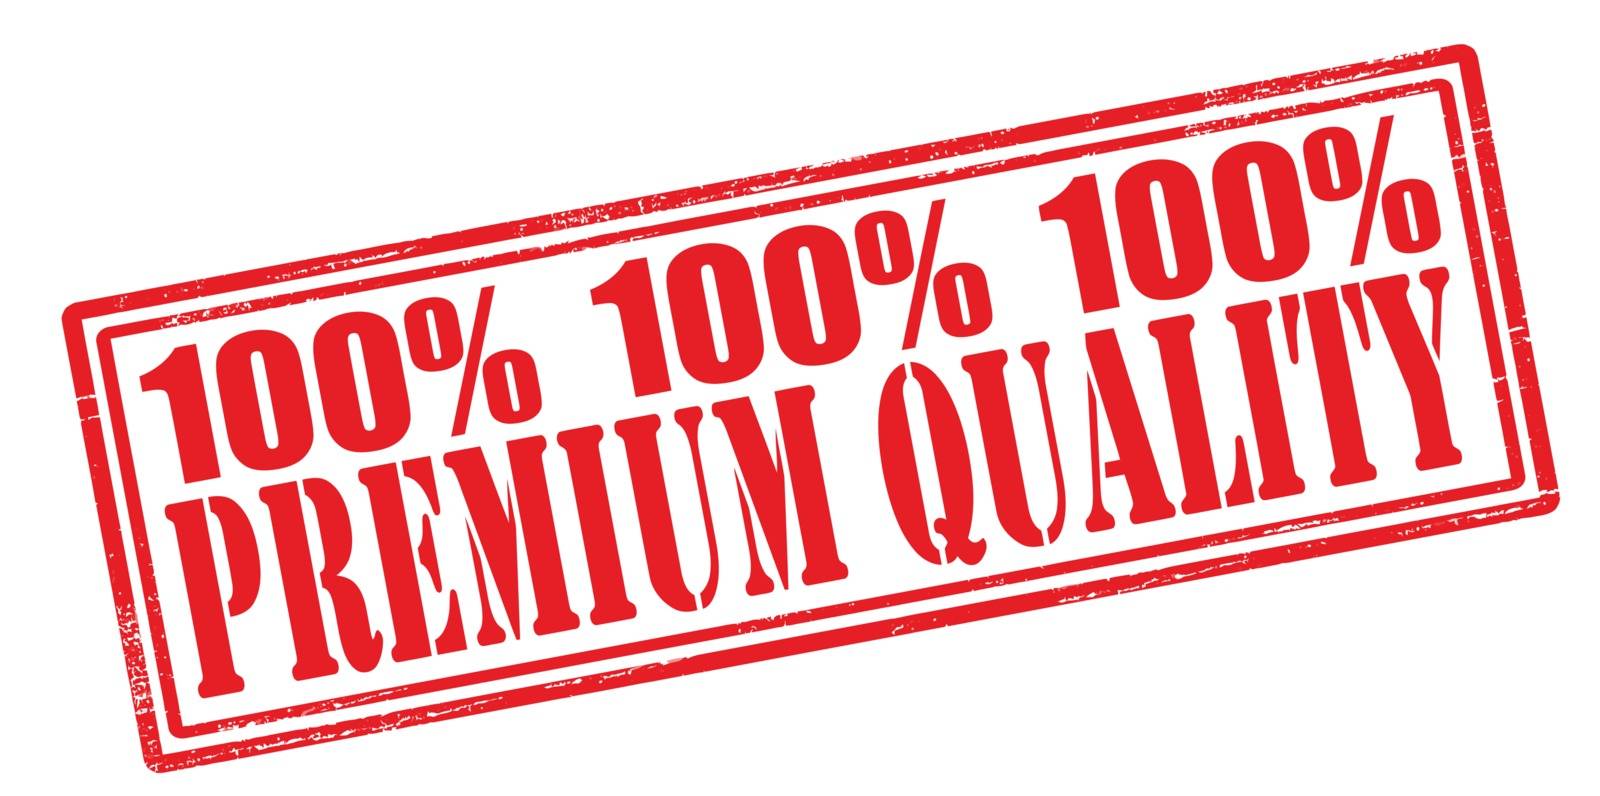 Premium quality by carmenbobo